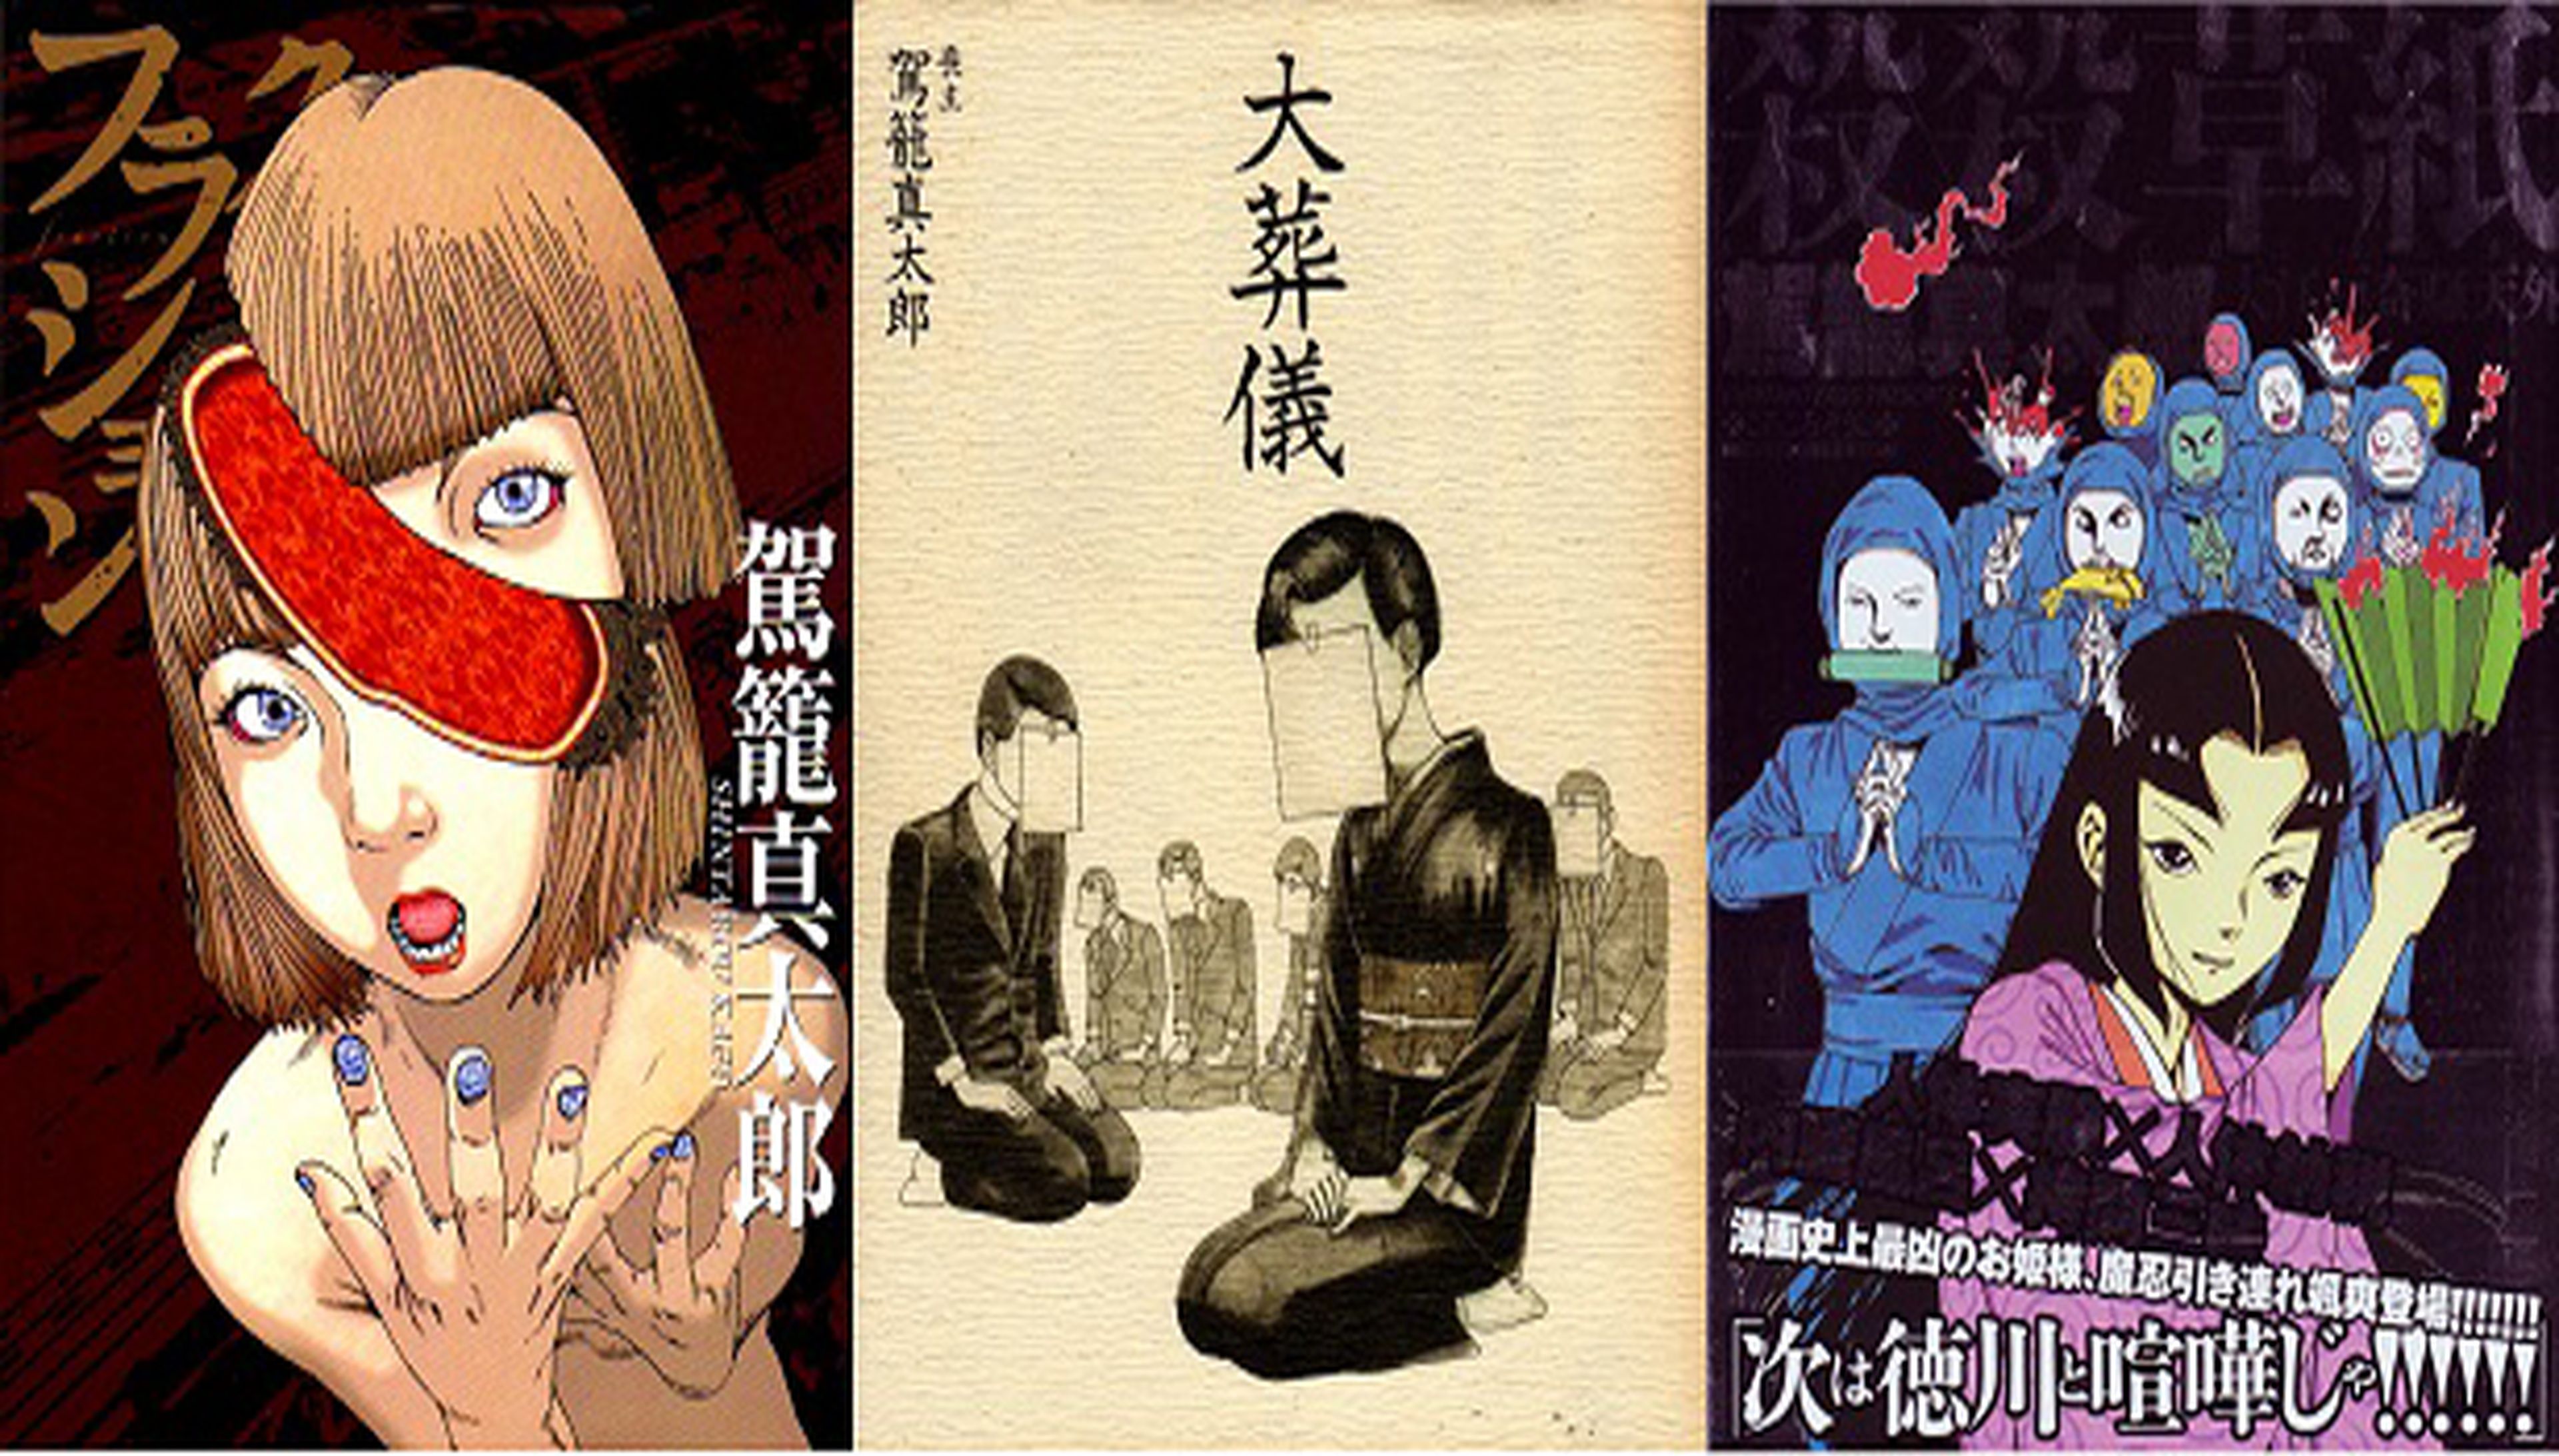 Fechas de lanzamiento de varias series de Shintaro Kago